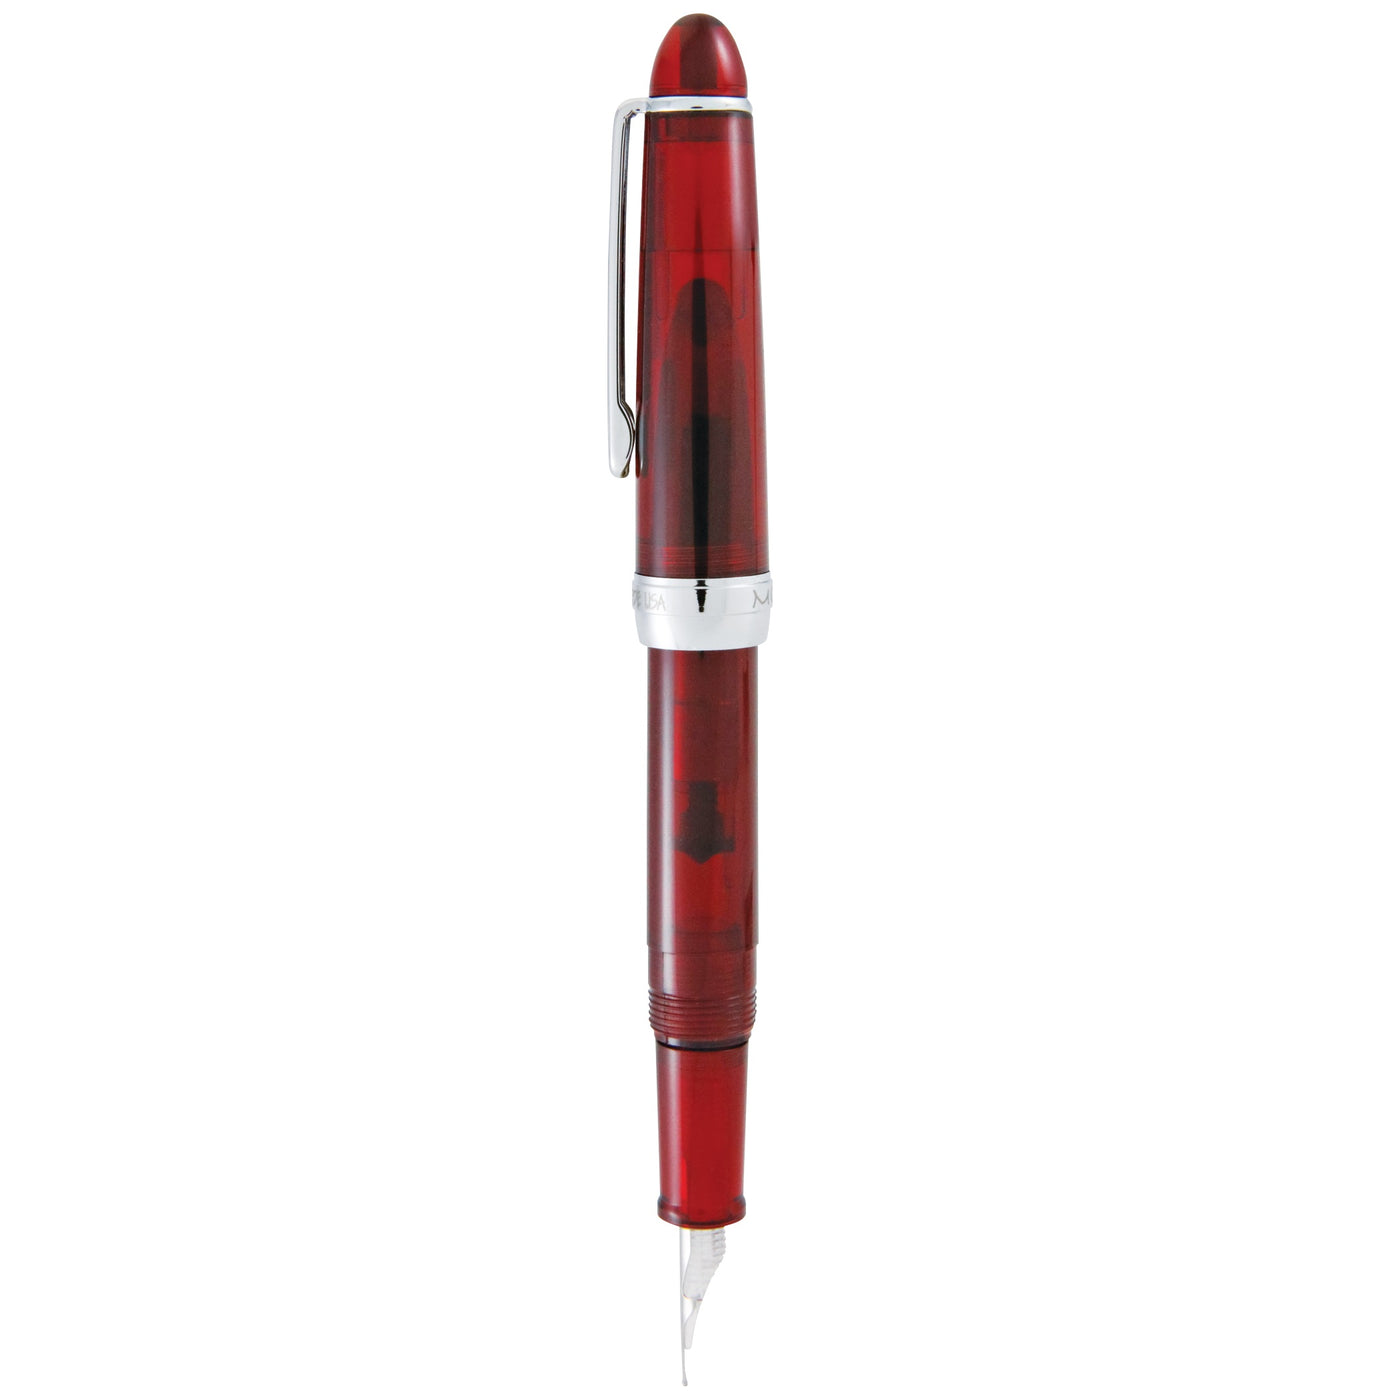 Monteverde Monza 3 Red Fountain Pen (M, F, Flex)